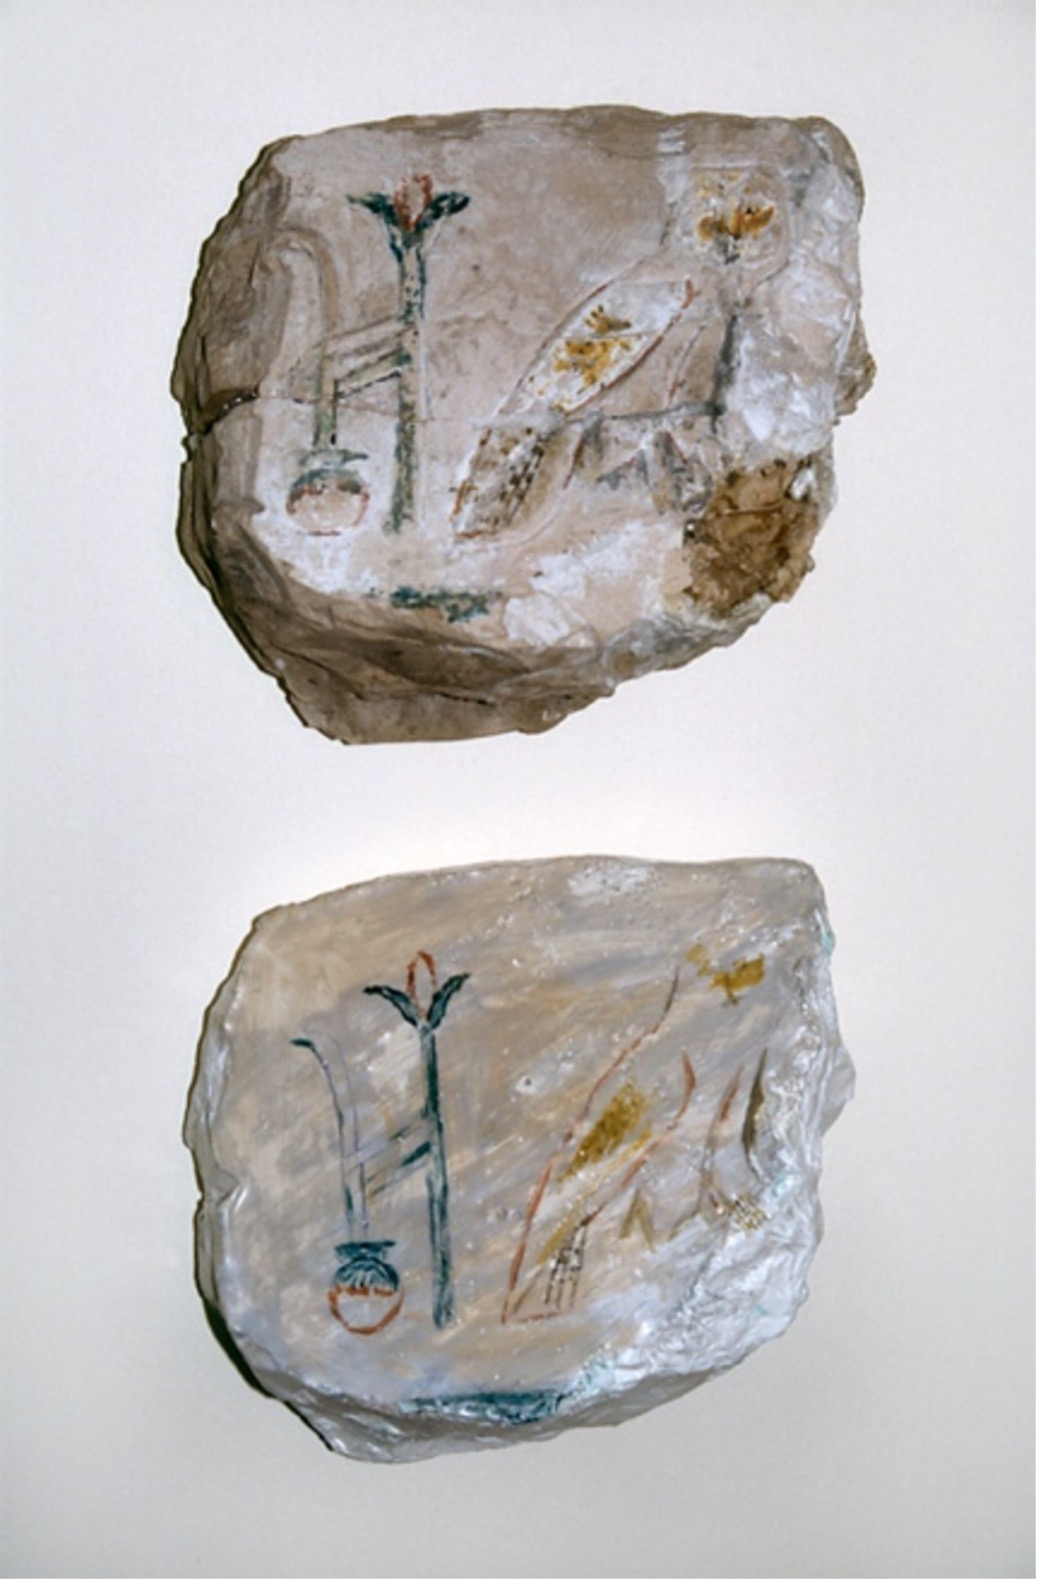 Limestone fragment (top), plastic mold (bottom)